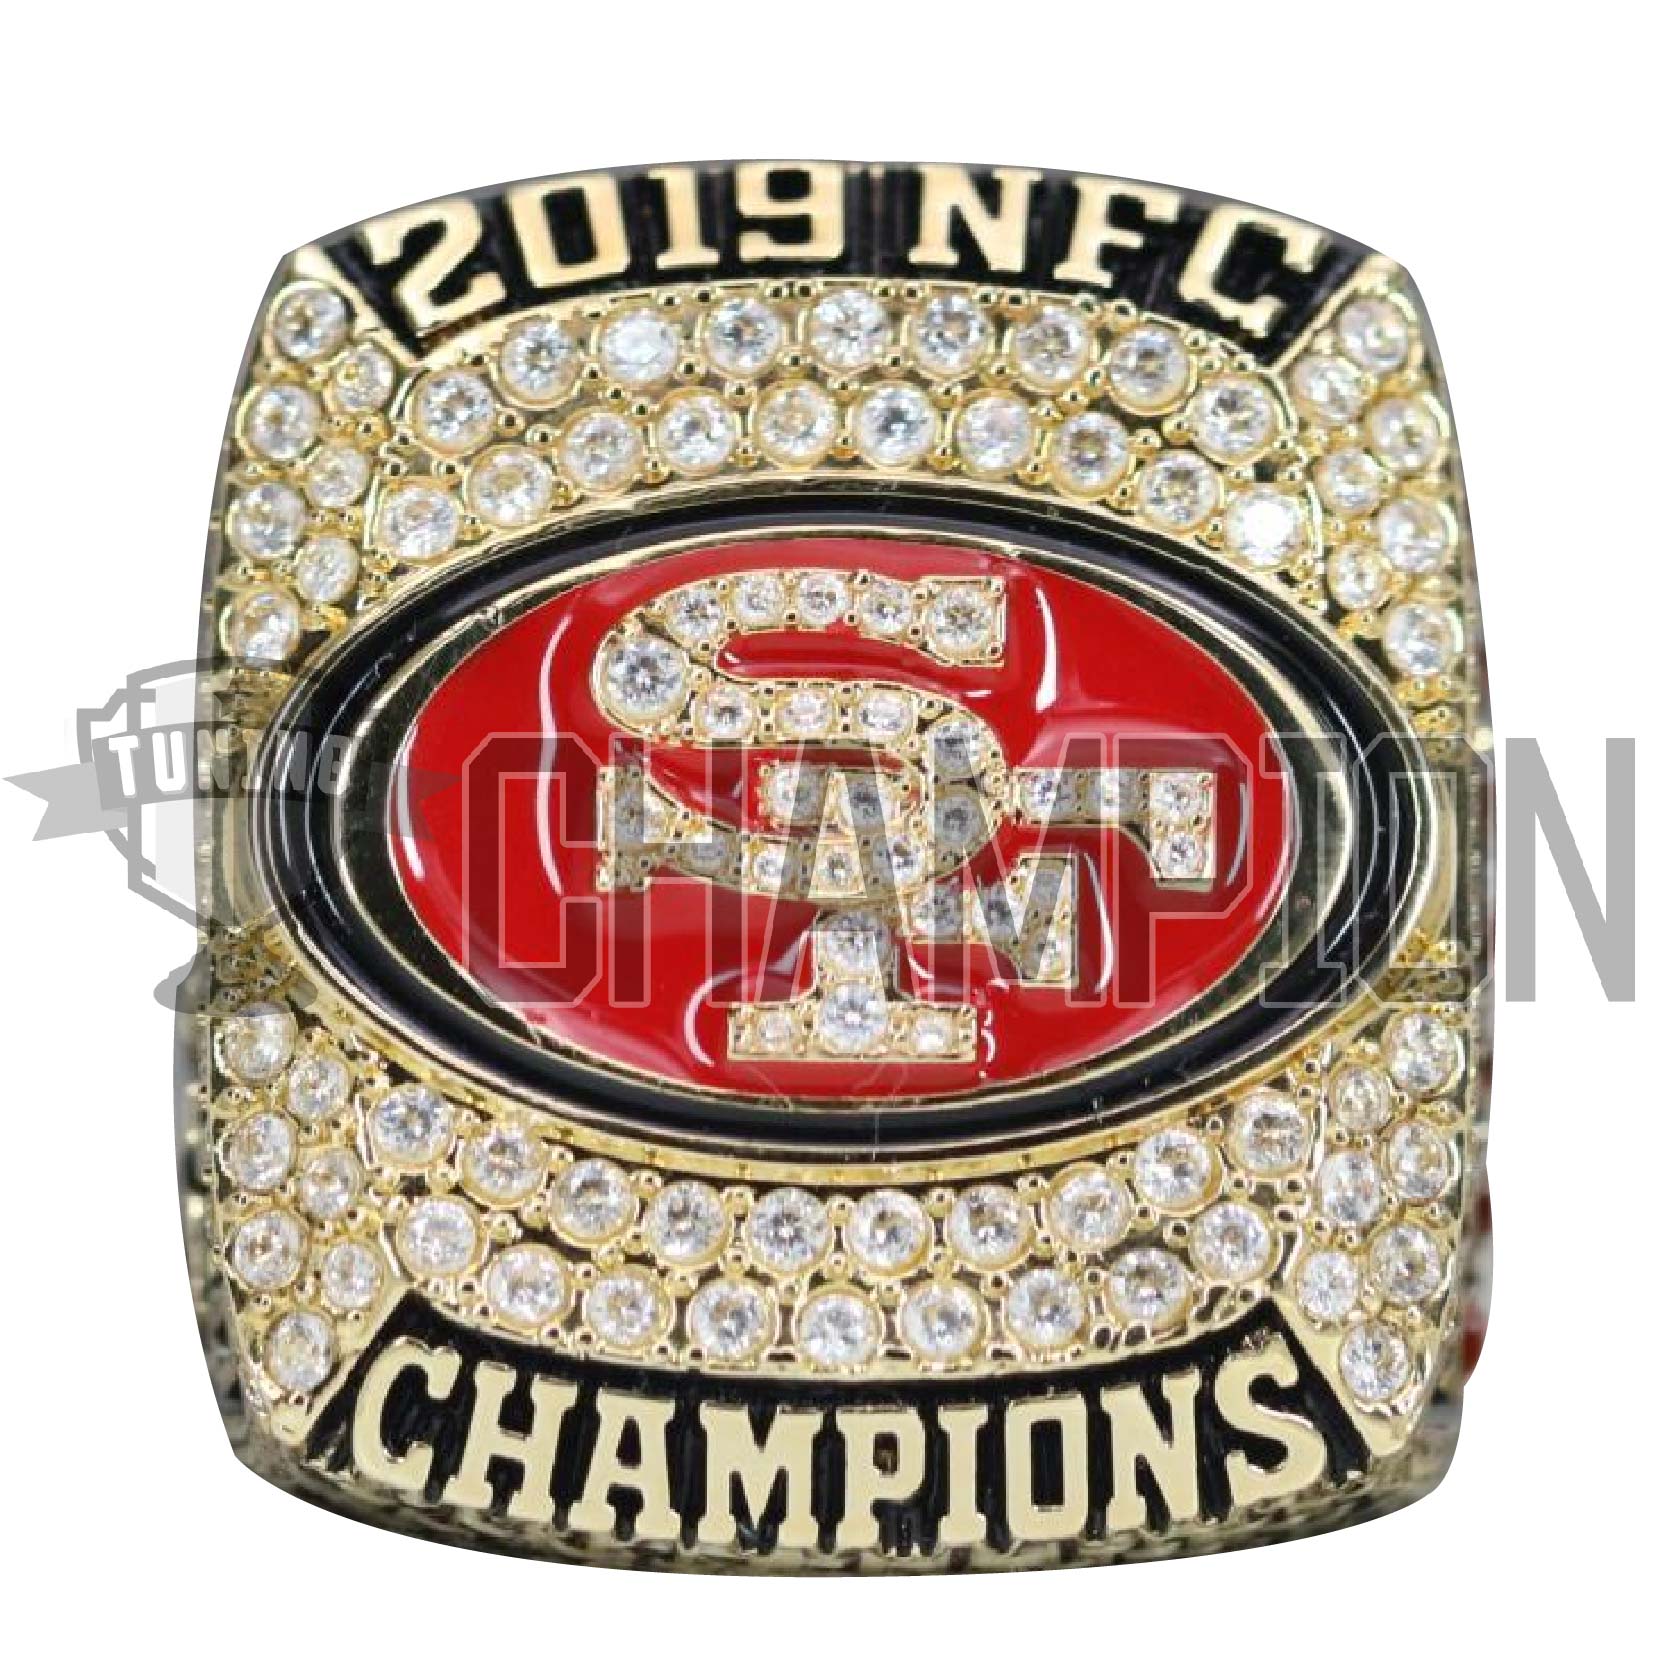 49ers last ring